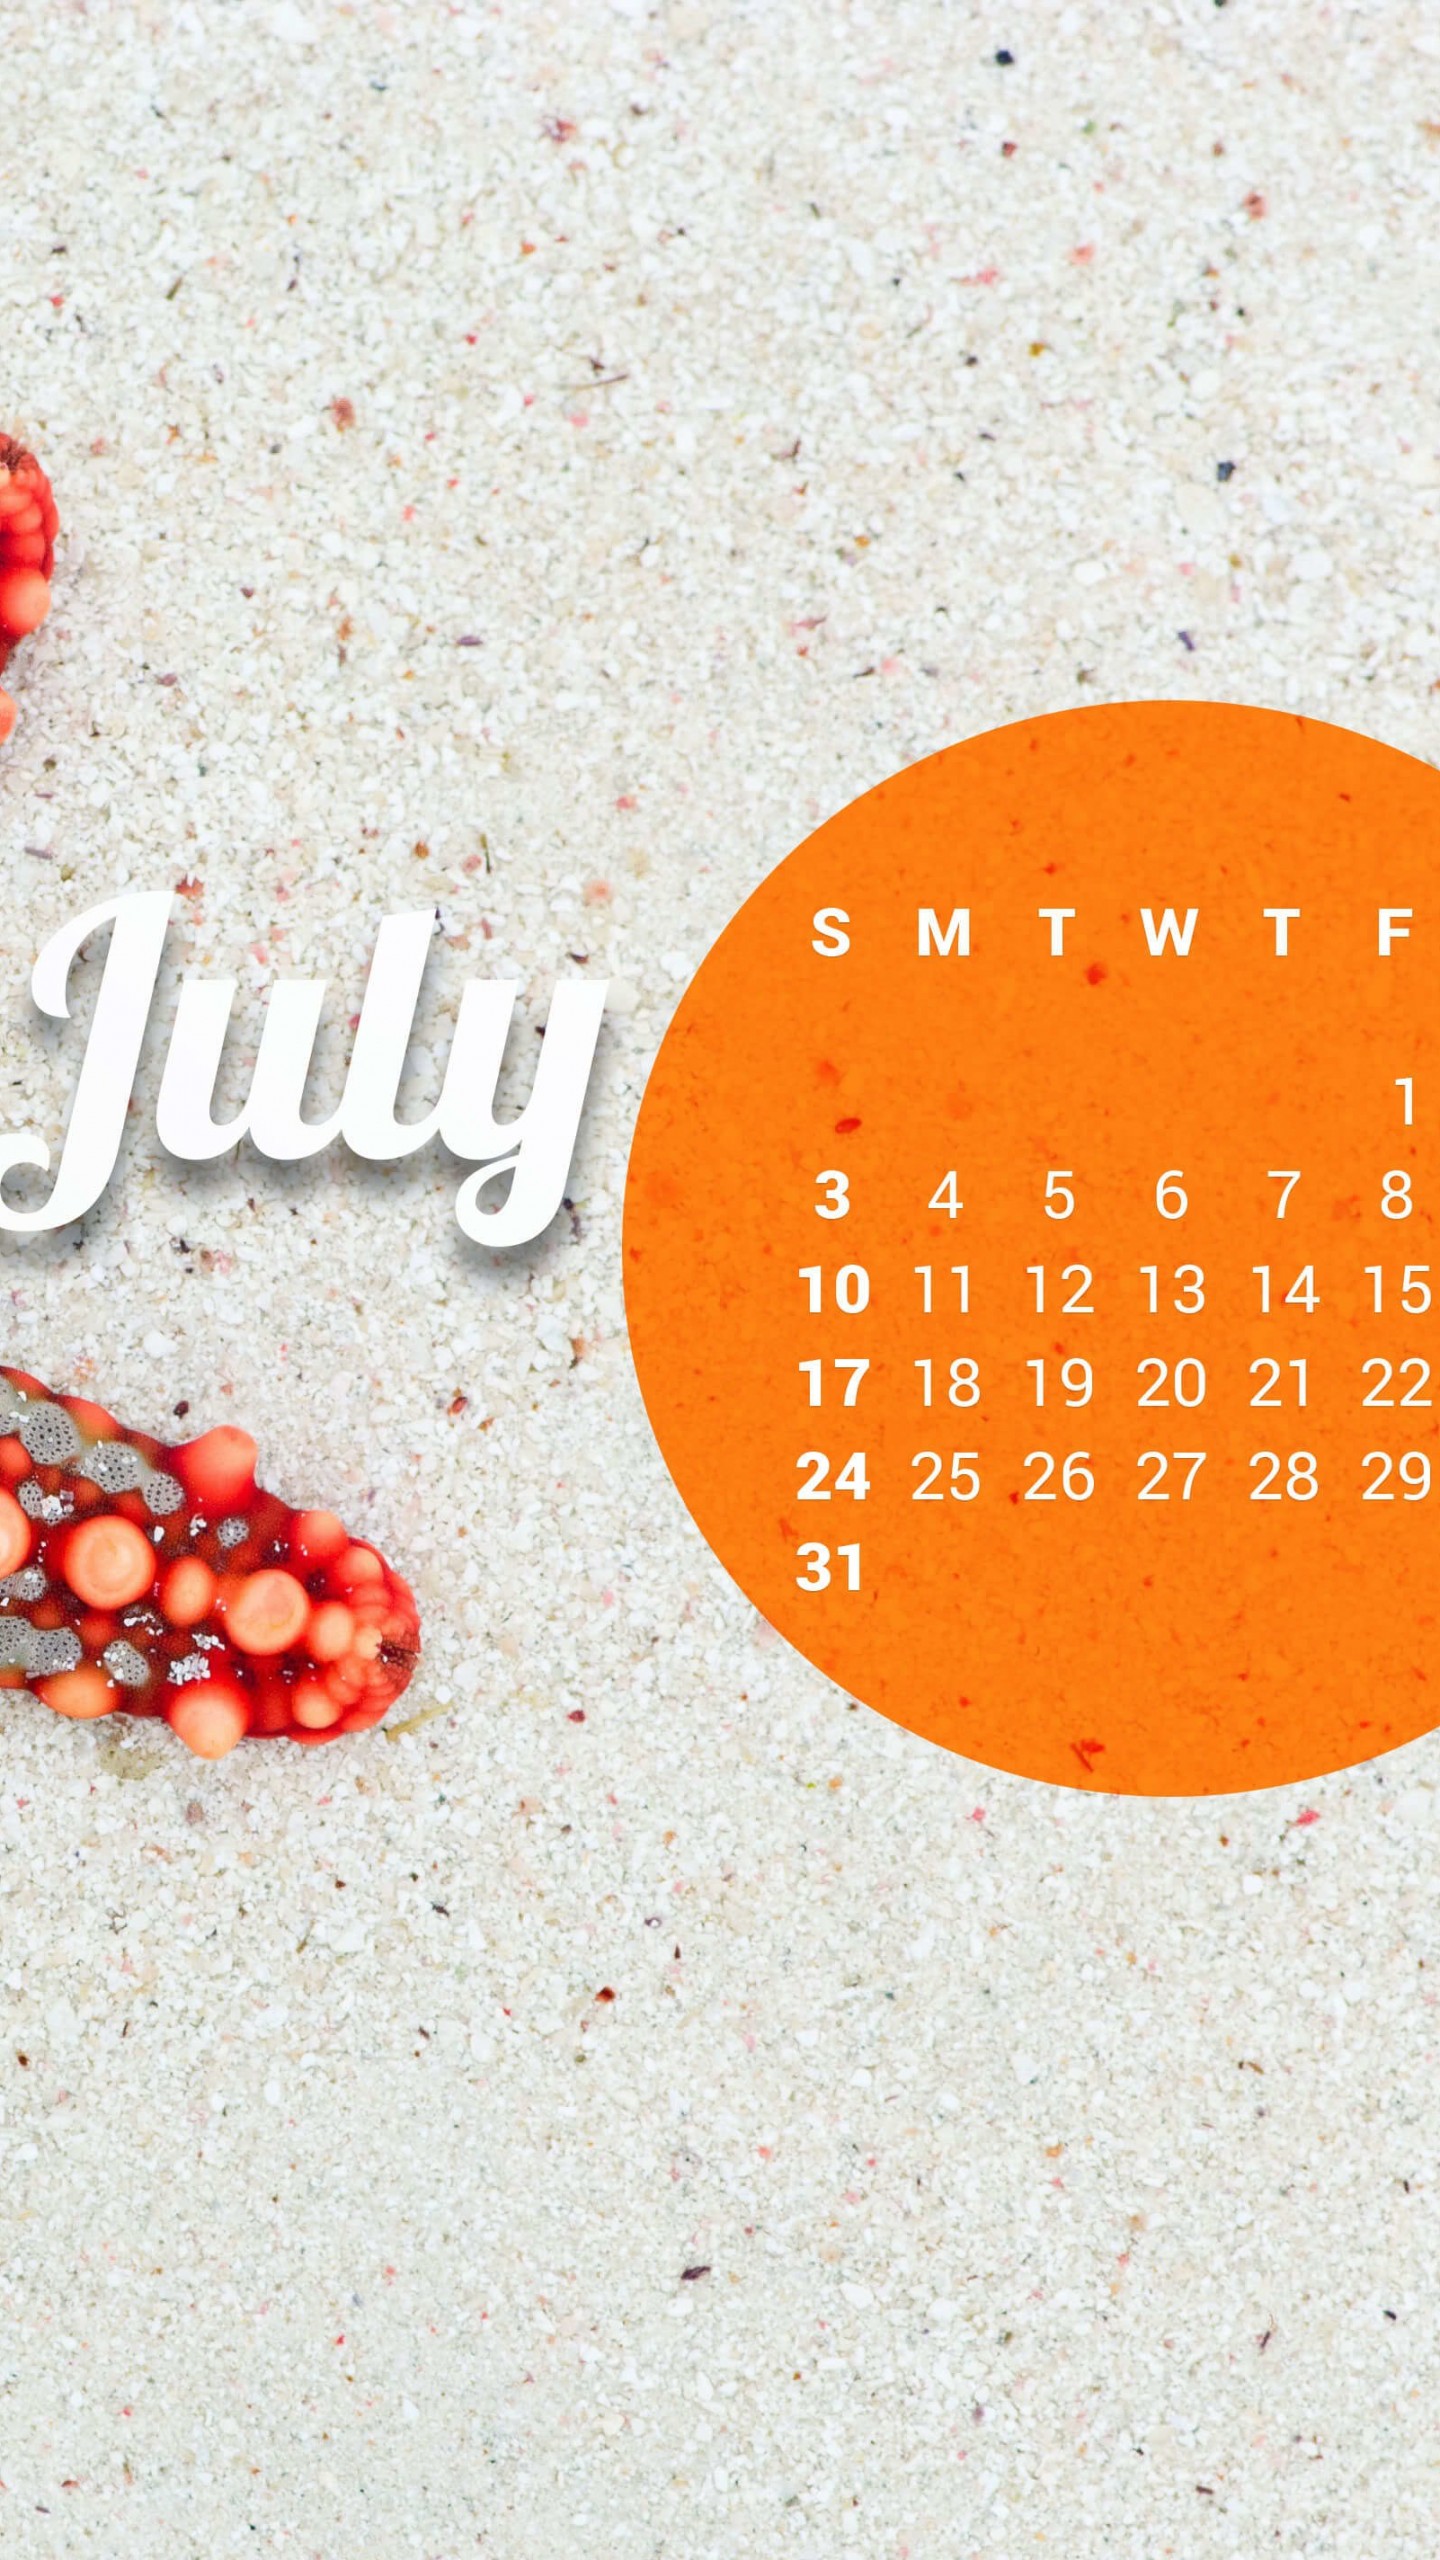 July 2016 Calendar Wallpaper for SAMSUNG Galaxy S6